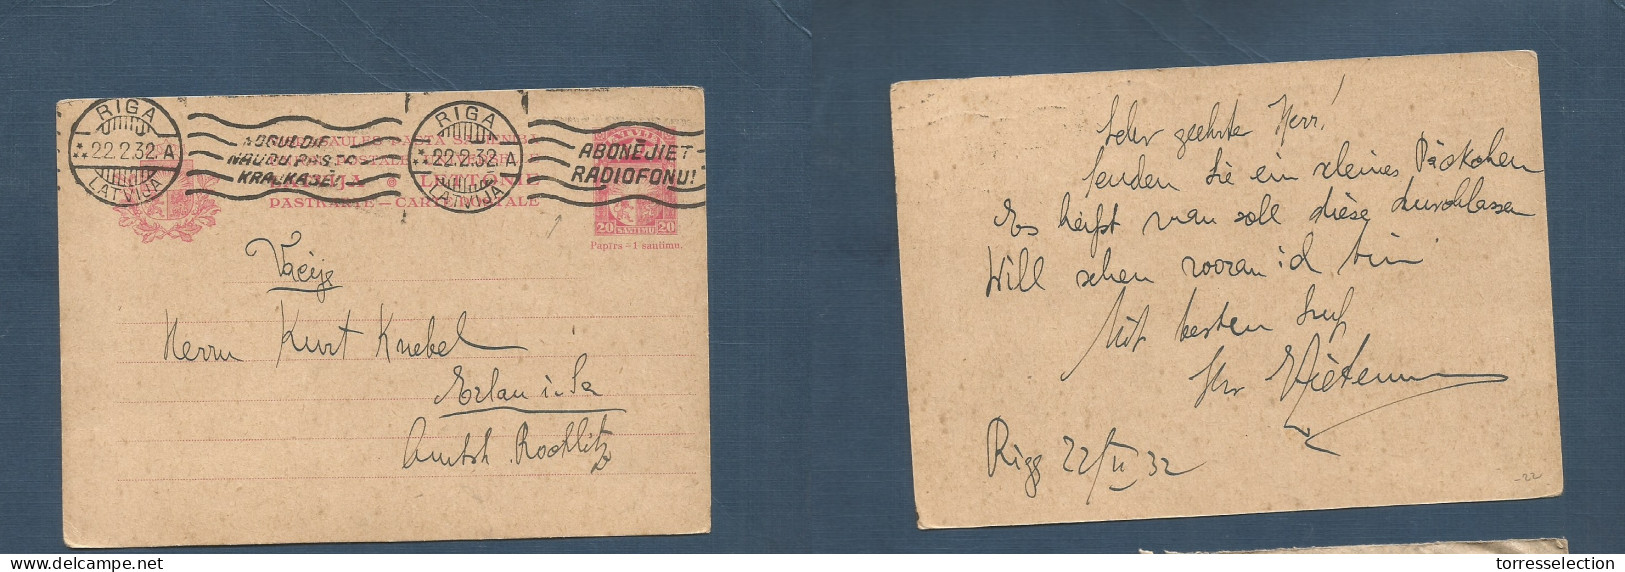 LATVIA. 1932 (22 Feb) Riga - Erlaniila, Rochlitz. 20s Rose Stat Card + Rolling Slogan Cachet. Fine. XSALE. - Latvia